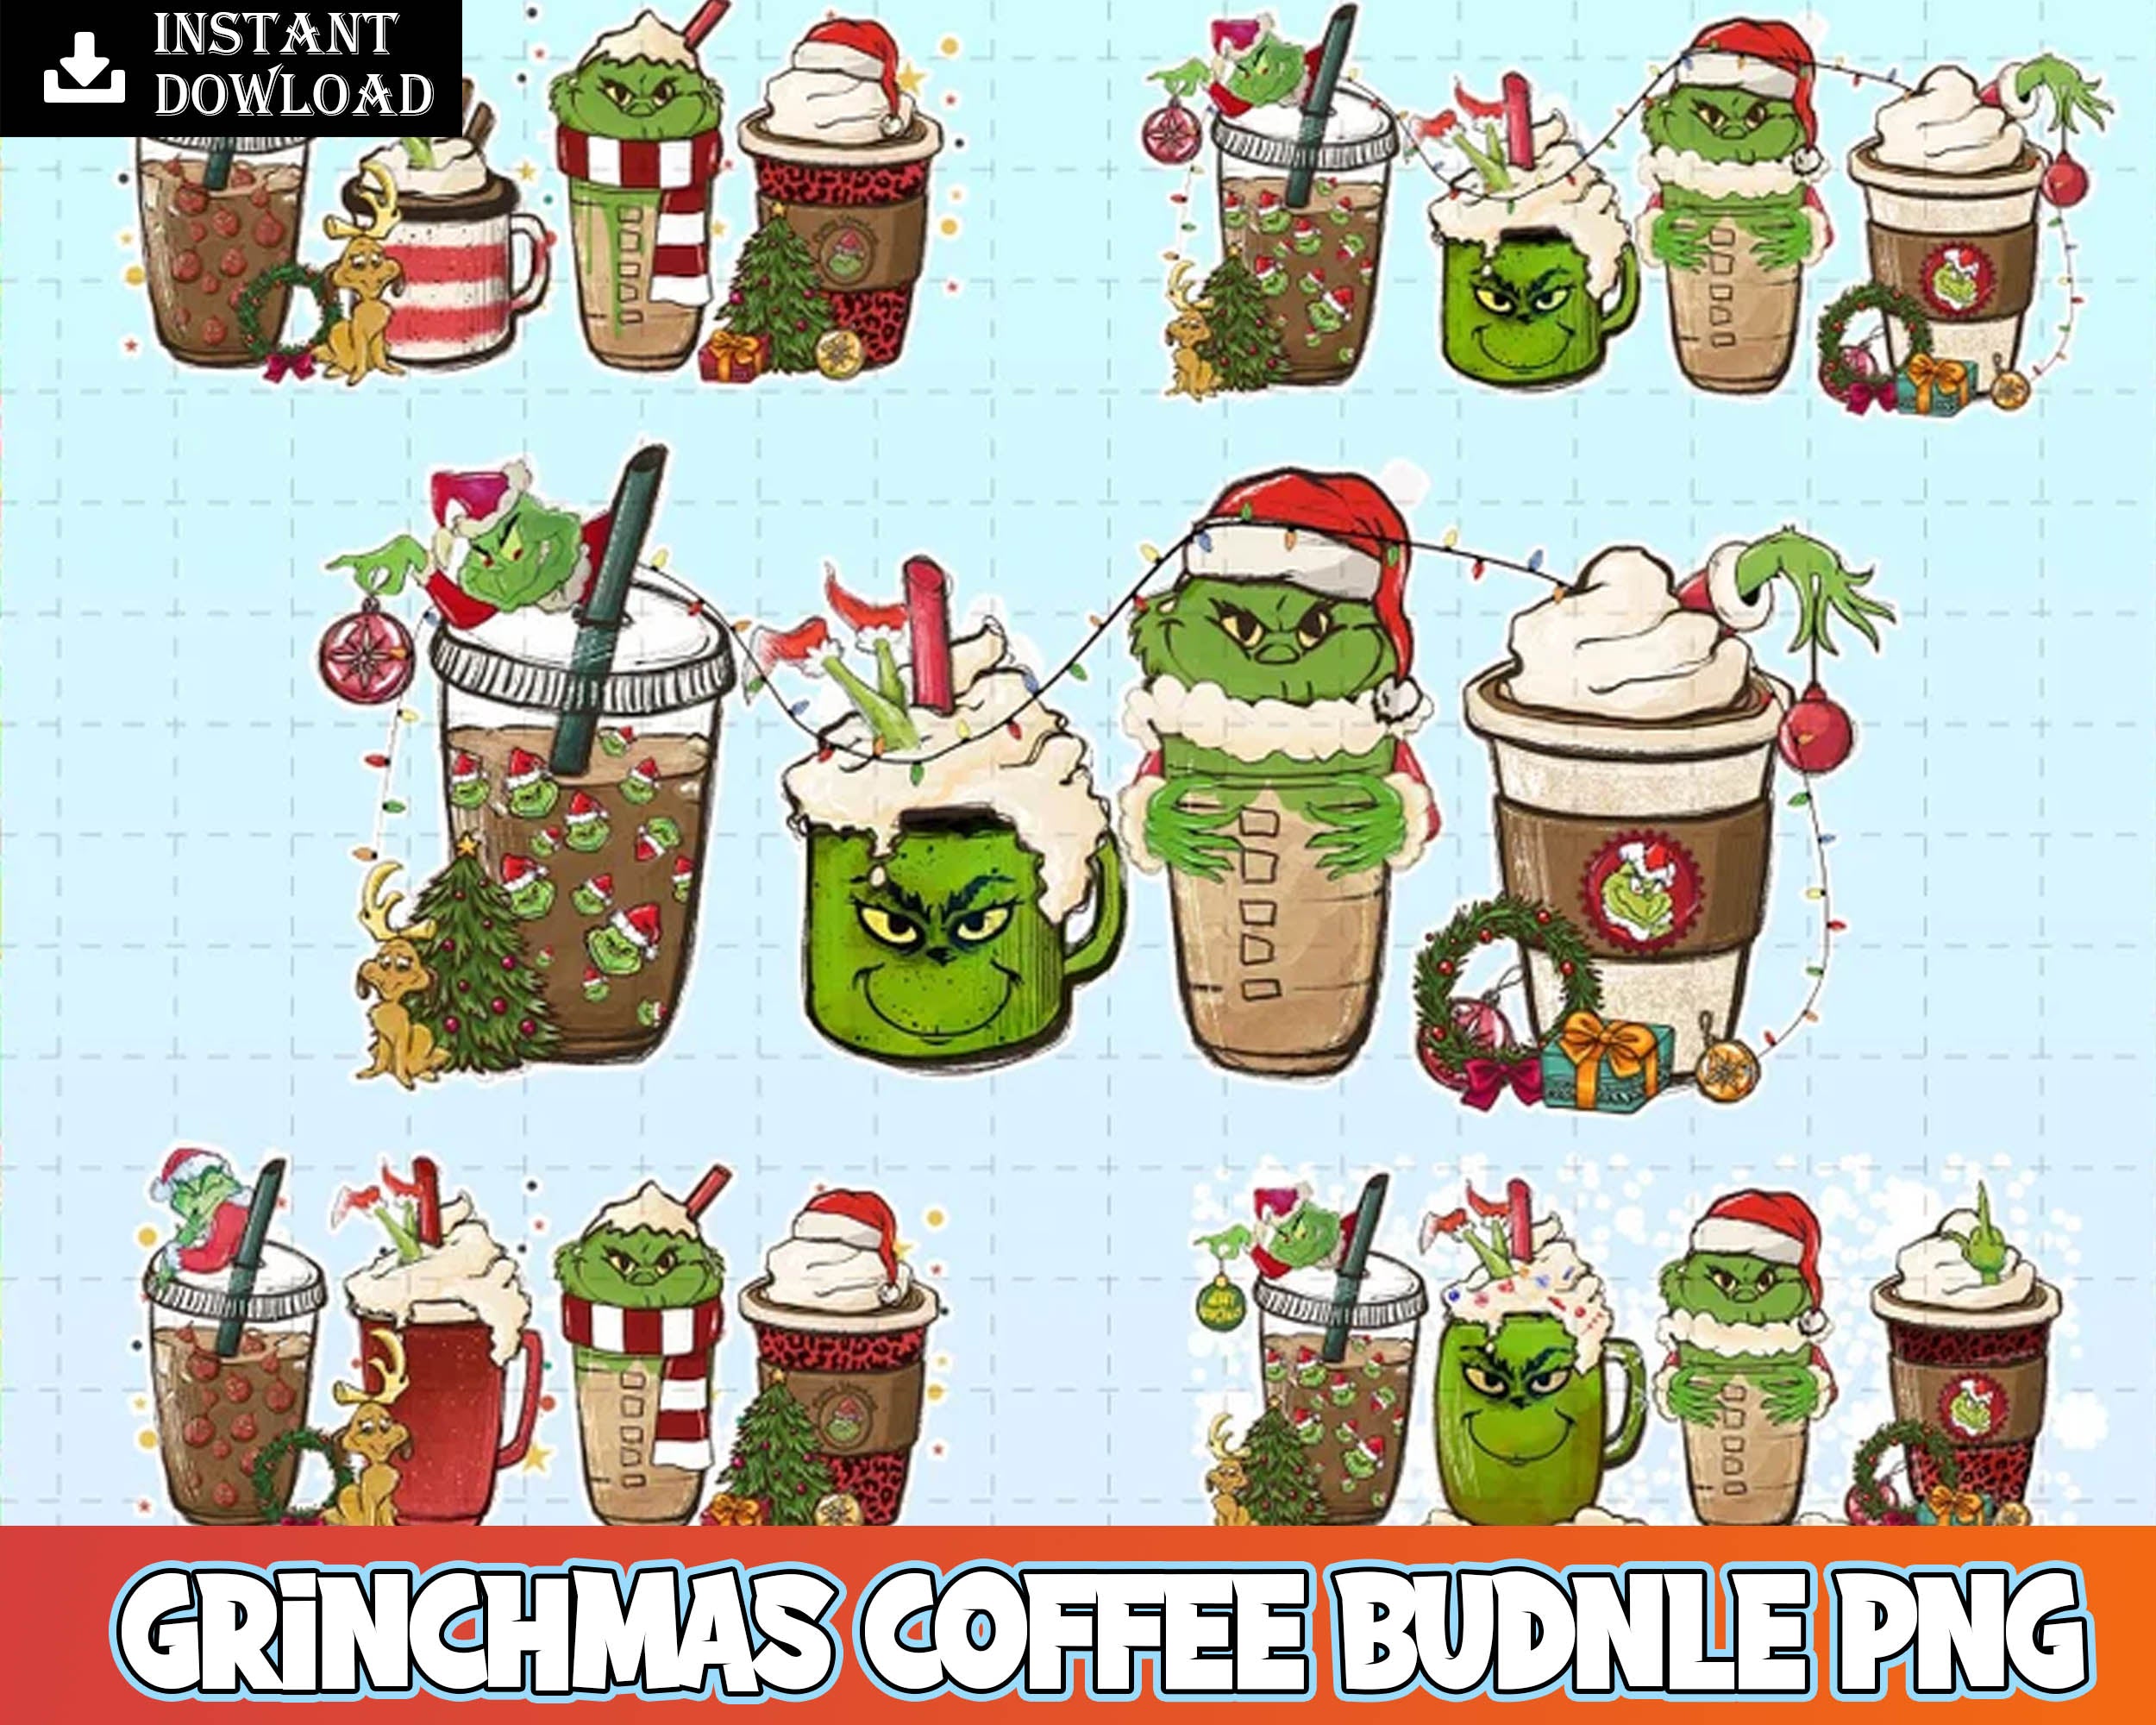 Grinchmas Coffee budnle, Christmas grinch cafe digital bundle, Designs bundle in PNG formats, Digital files